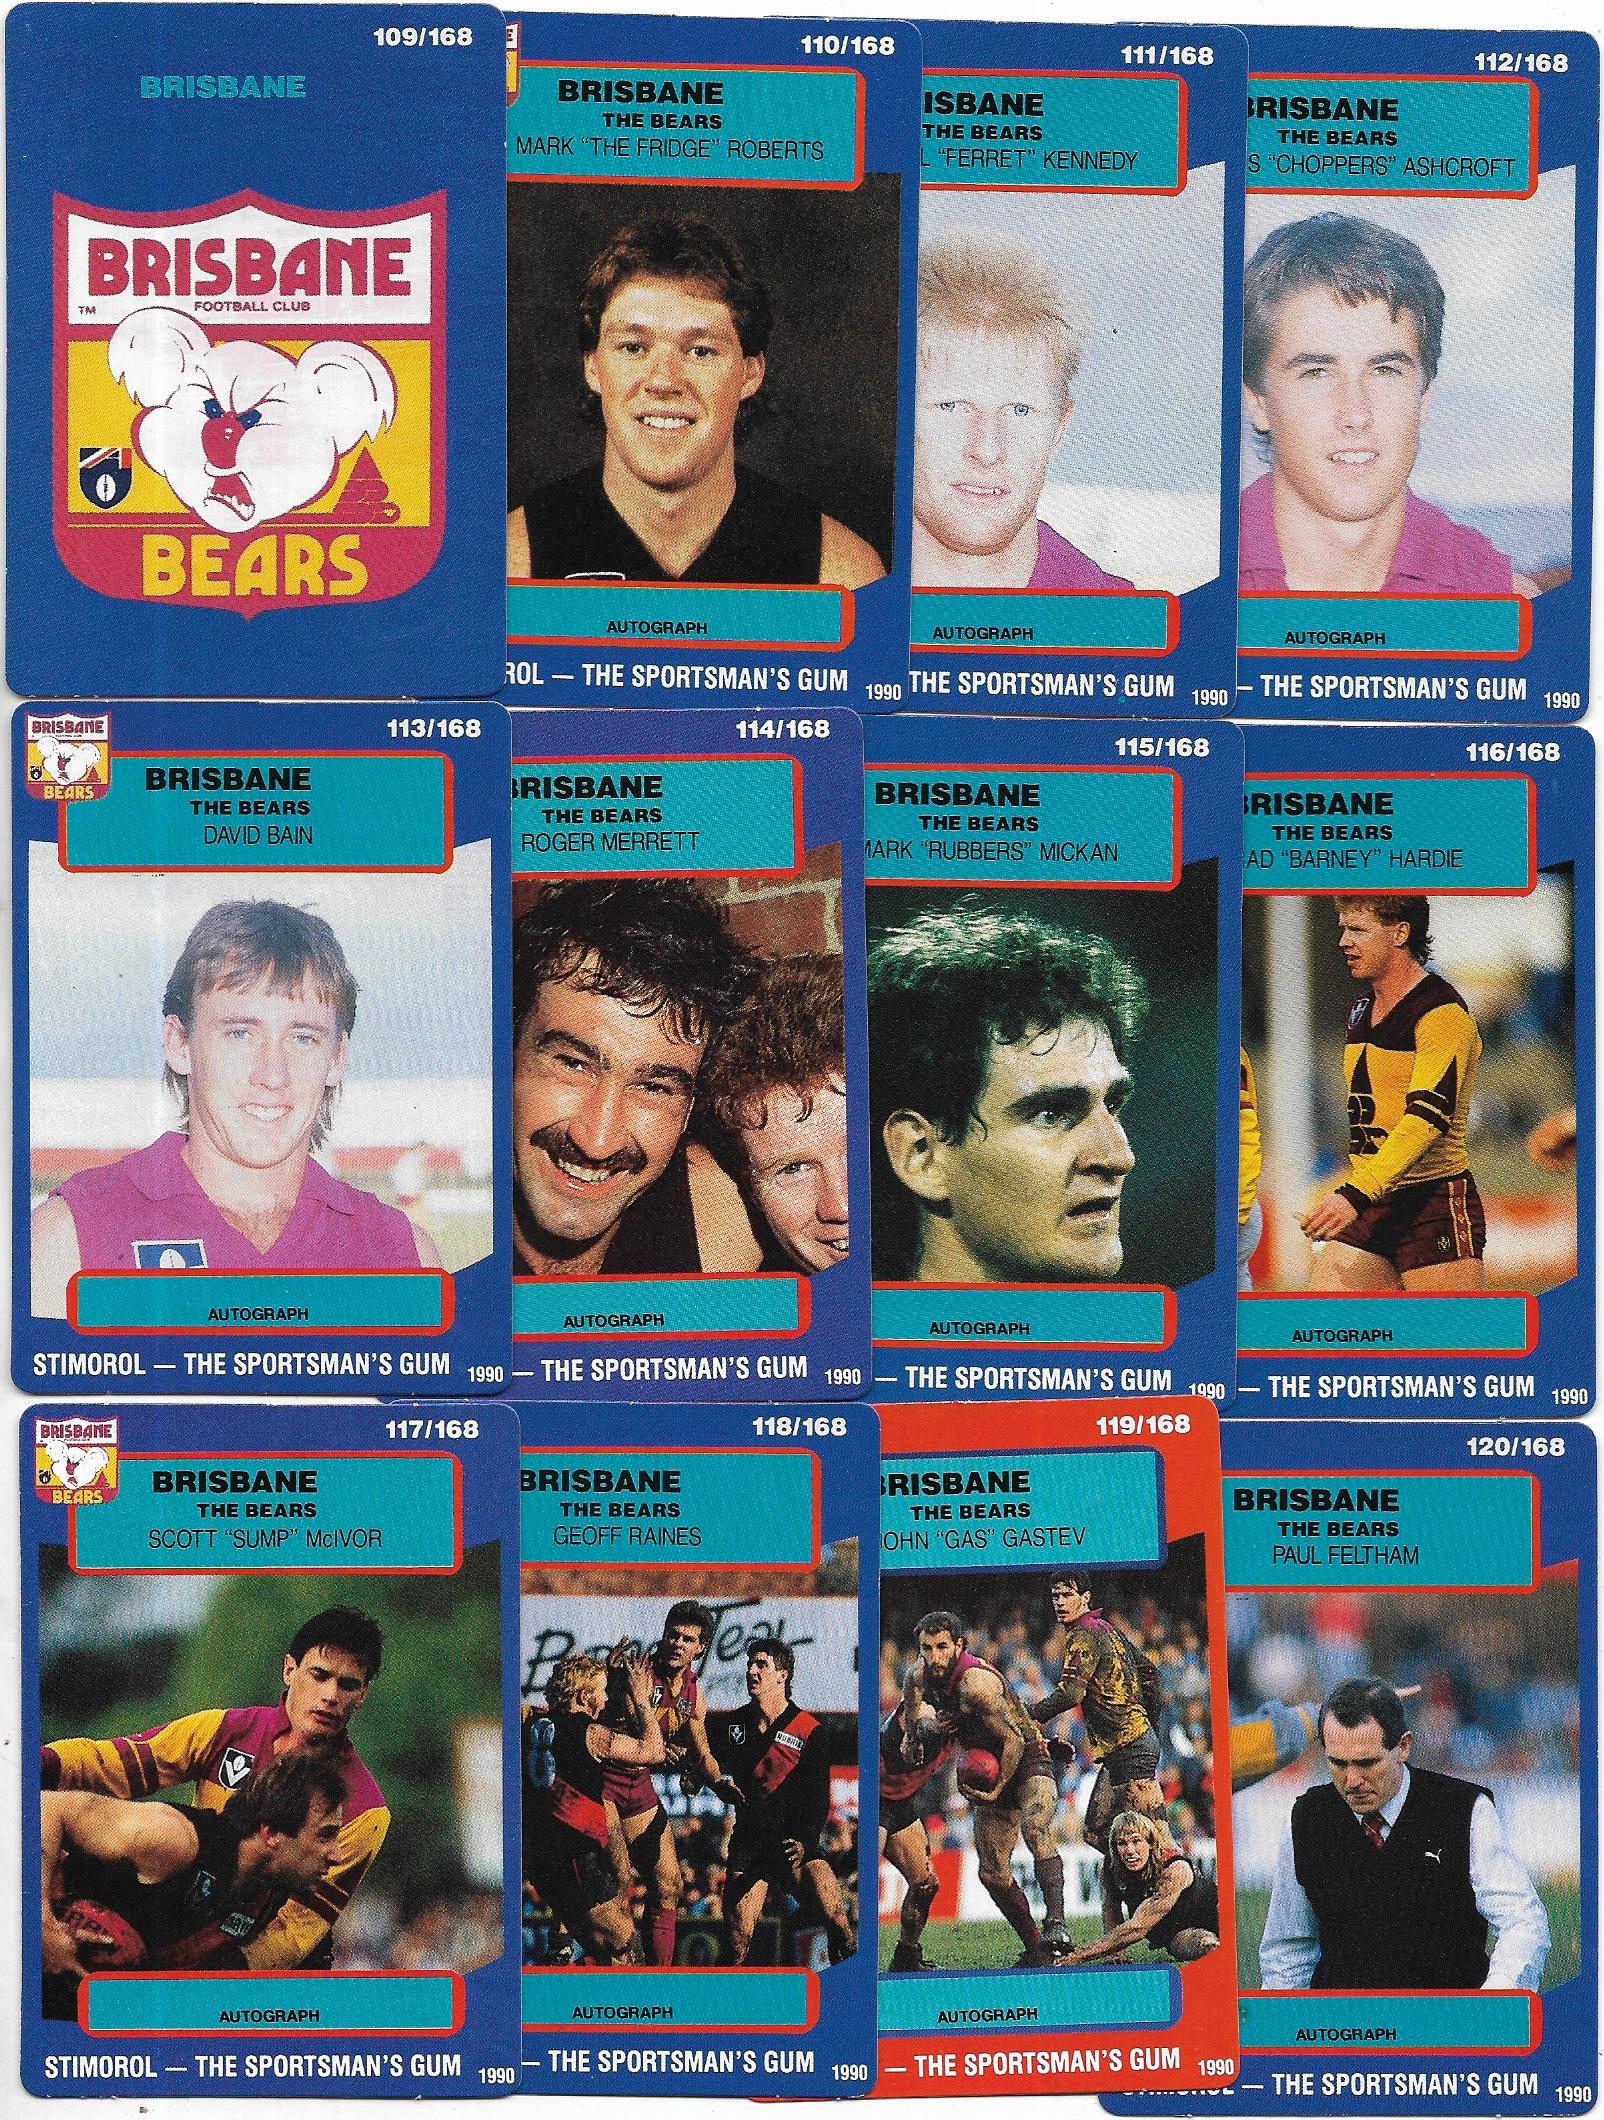 1990 Stimorol Team Set – Brisbane